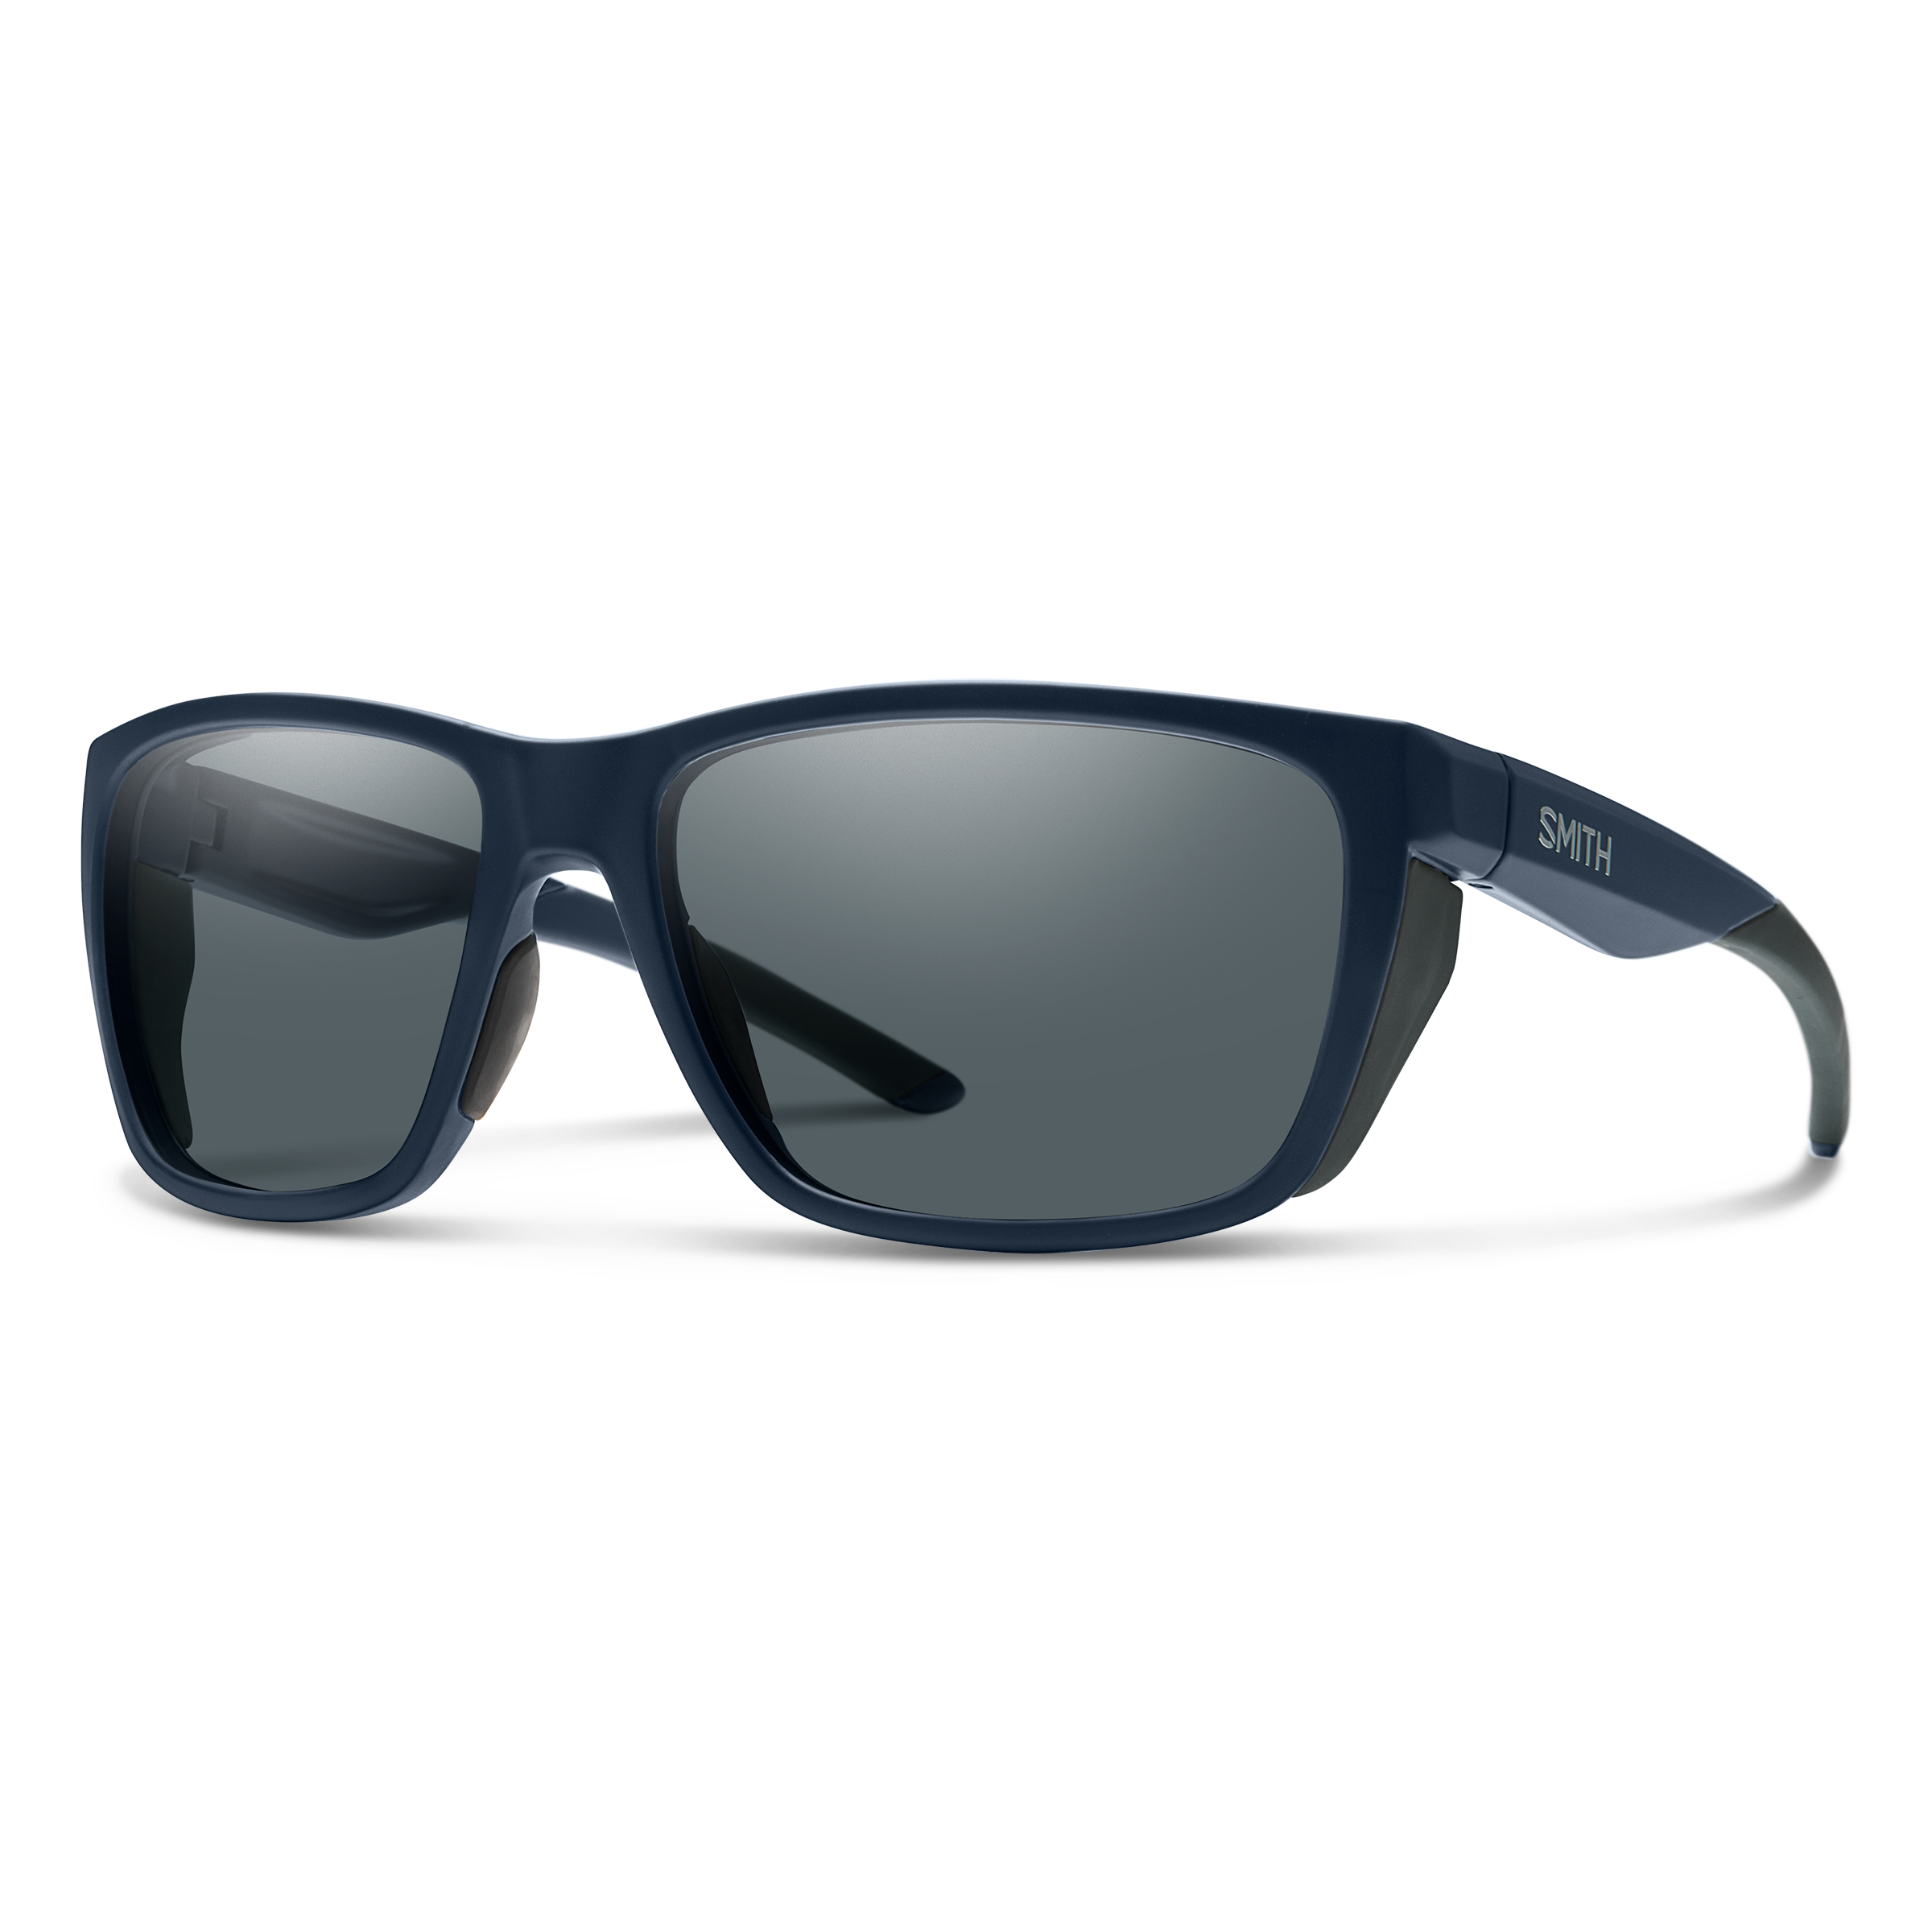 Smith Director Elite Tactical Carbonic Sunglasses Black Frame Gray Lens